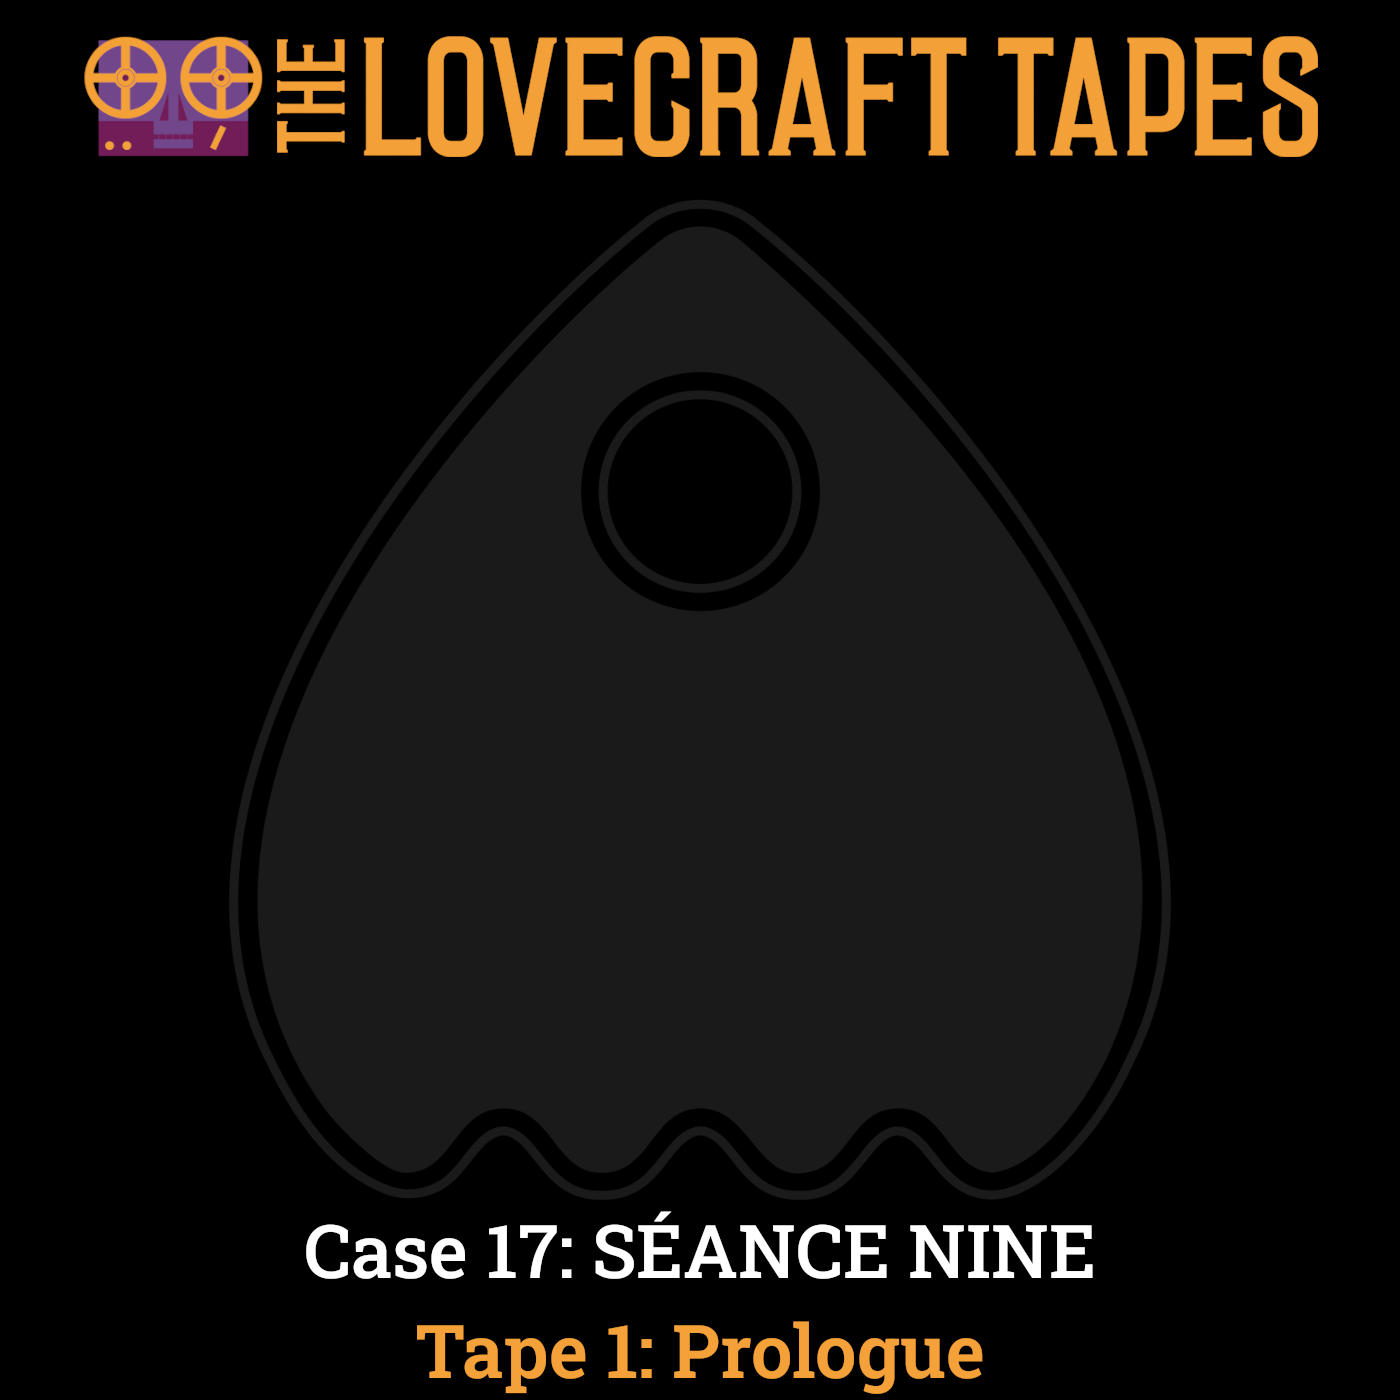 Case 17: SÉANCE NINE / Tape 1: Prologue